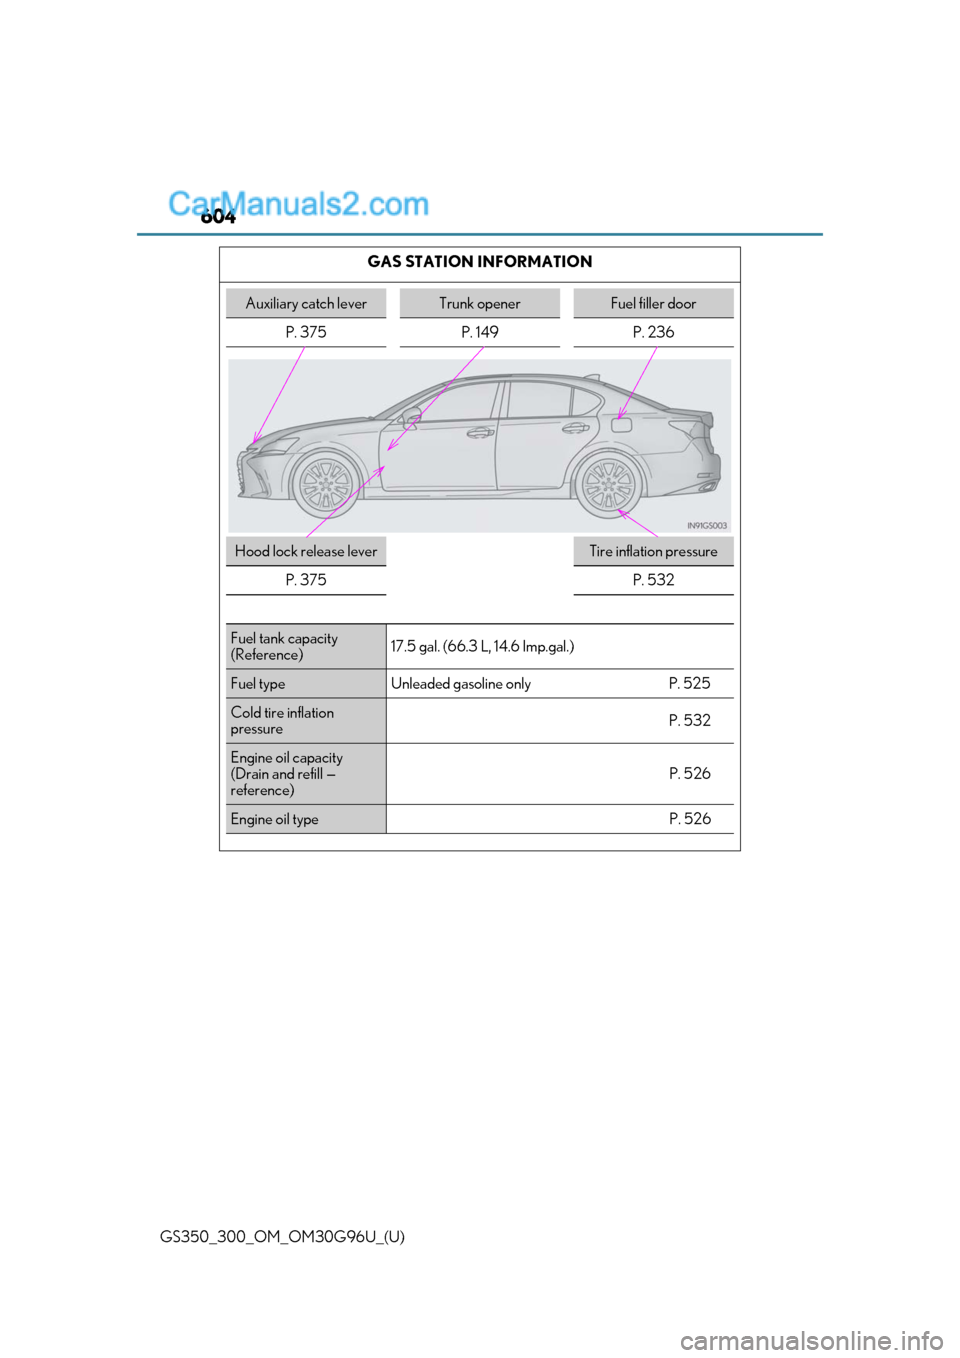 Lexus GS300 2019  Owners Manual 604
GS350_300_OM_OM30G96U_(U)GAS STATION INFORMATION
Auxiliary catch leverTrunk openerFuel filler door
P. 375 P. 149 P. 236
Hood lock release leverTire inflation pressure
P. 375
P. 532
Fuel tank capac